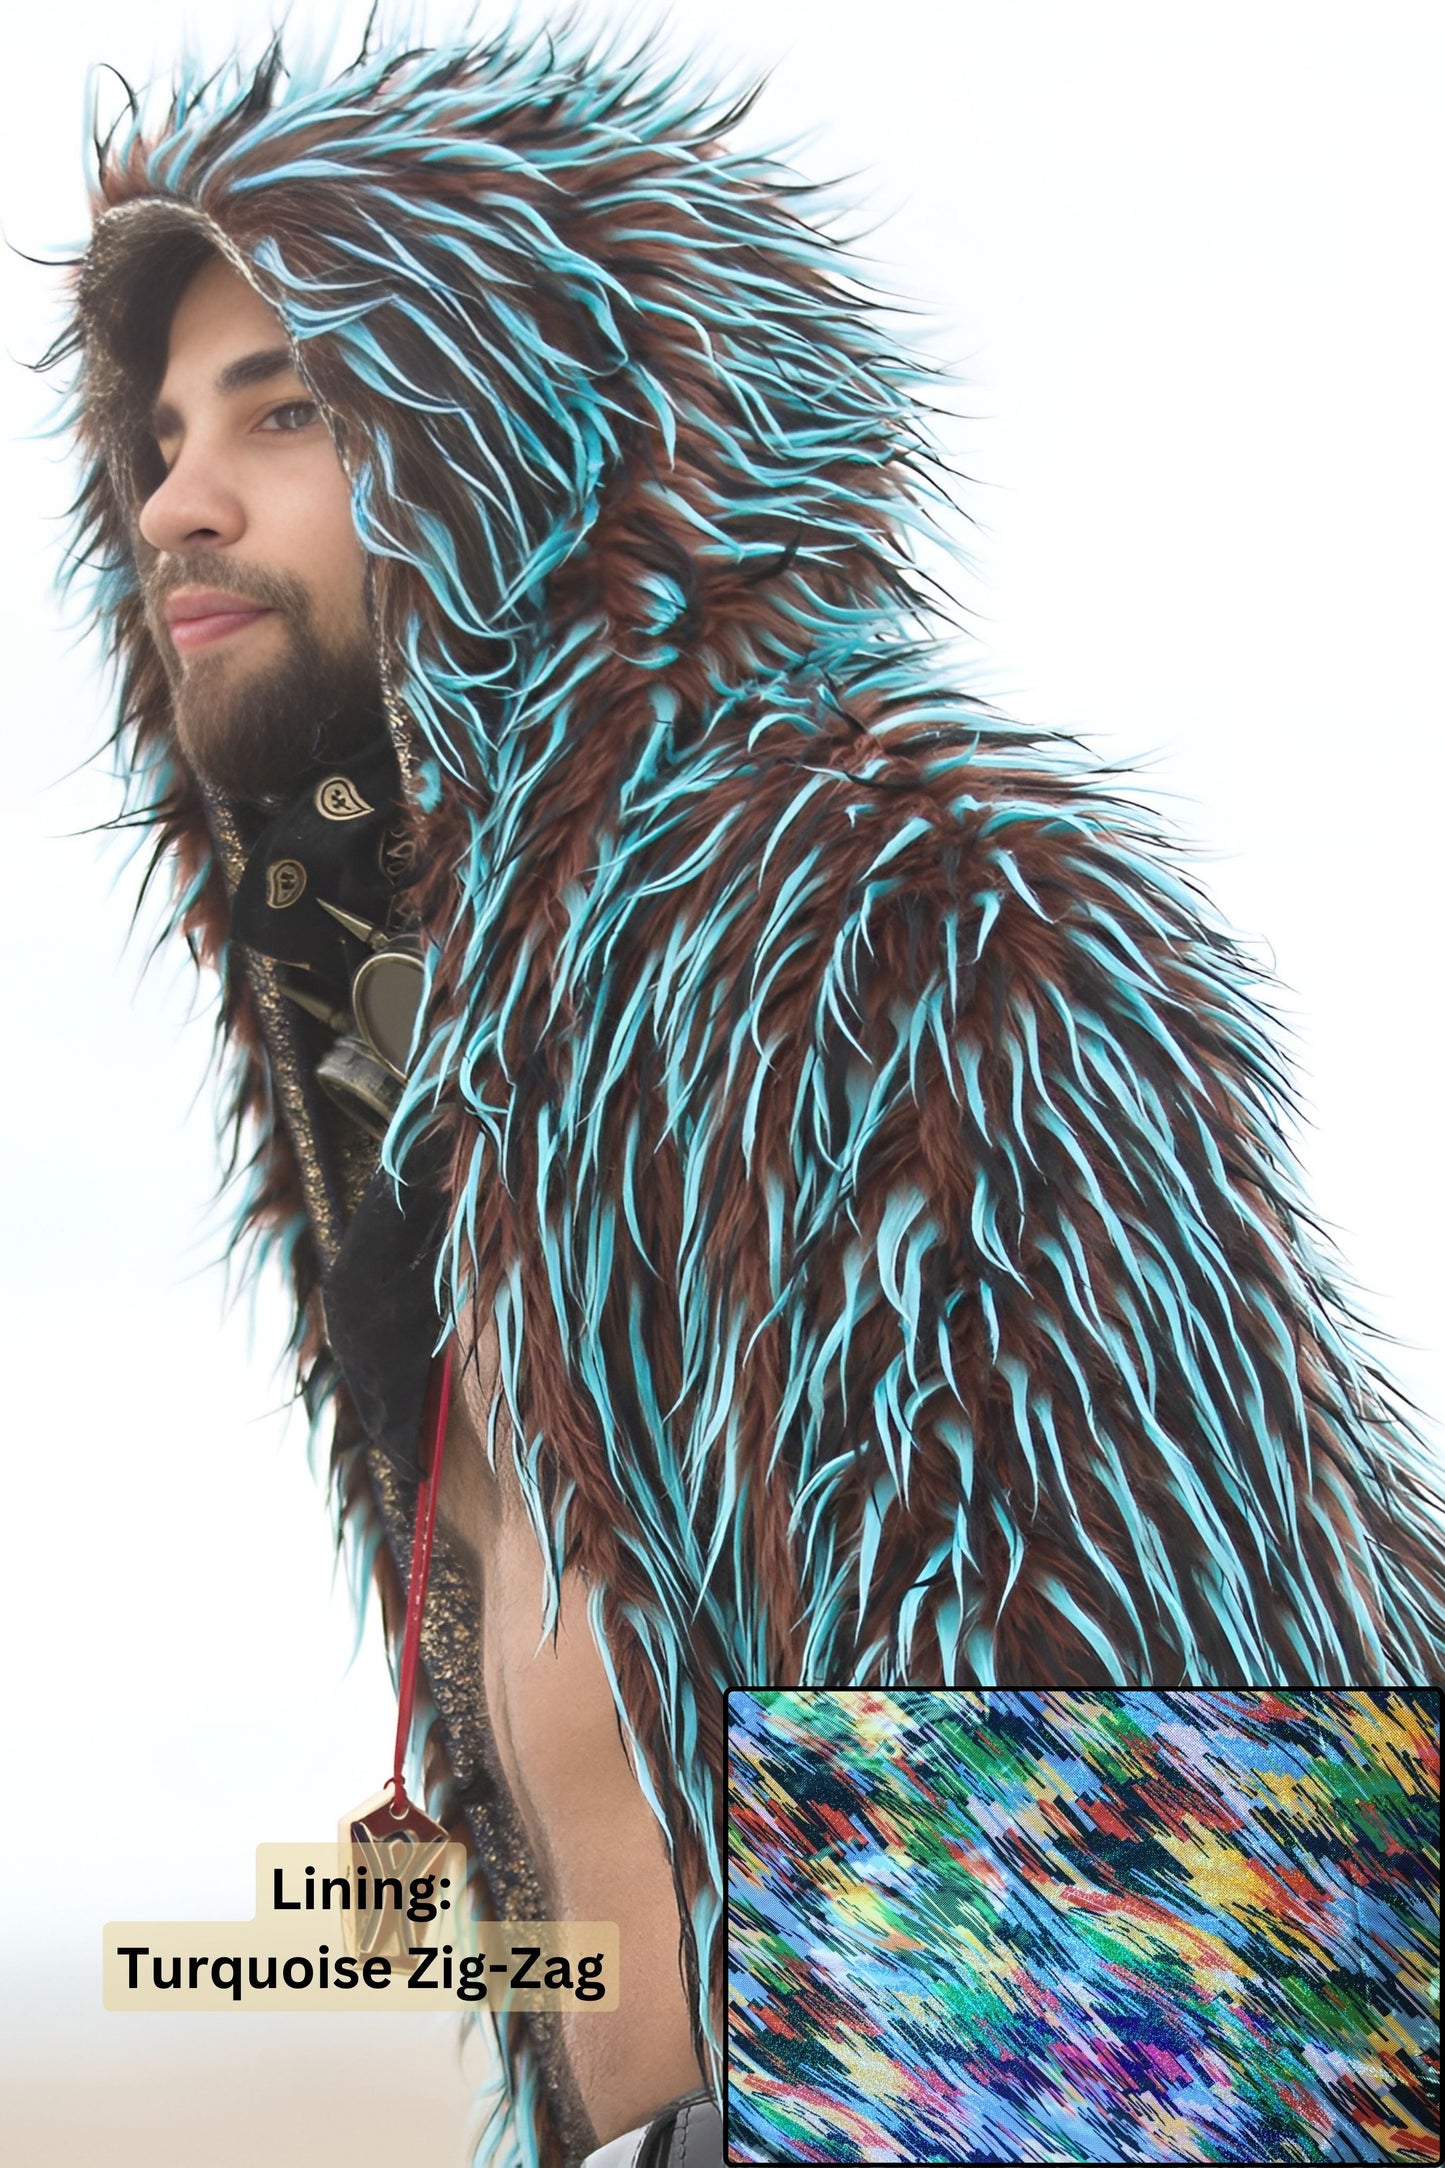 Gypsy Soul - Faux Fur Coat for Festivals - Boho Coats - Lining - Turquoise Zig-Zag - Front